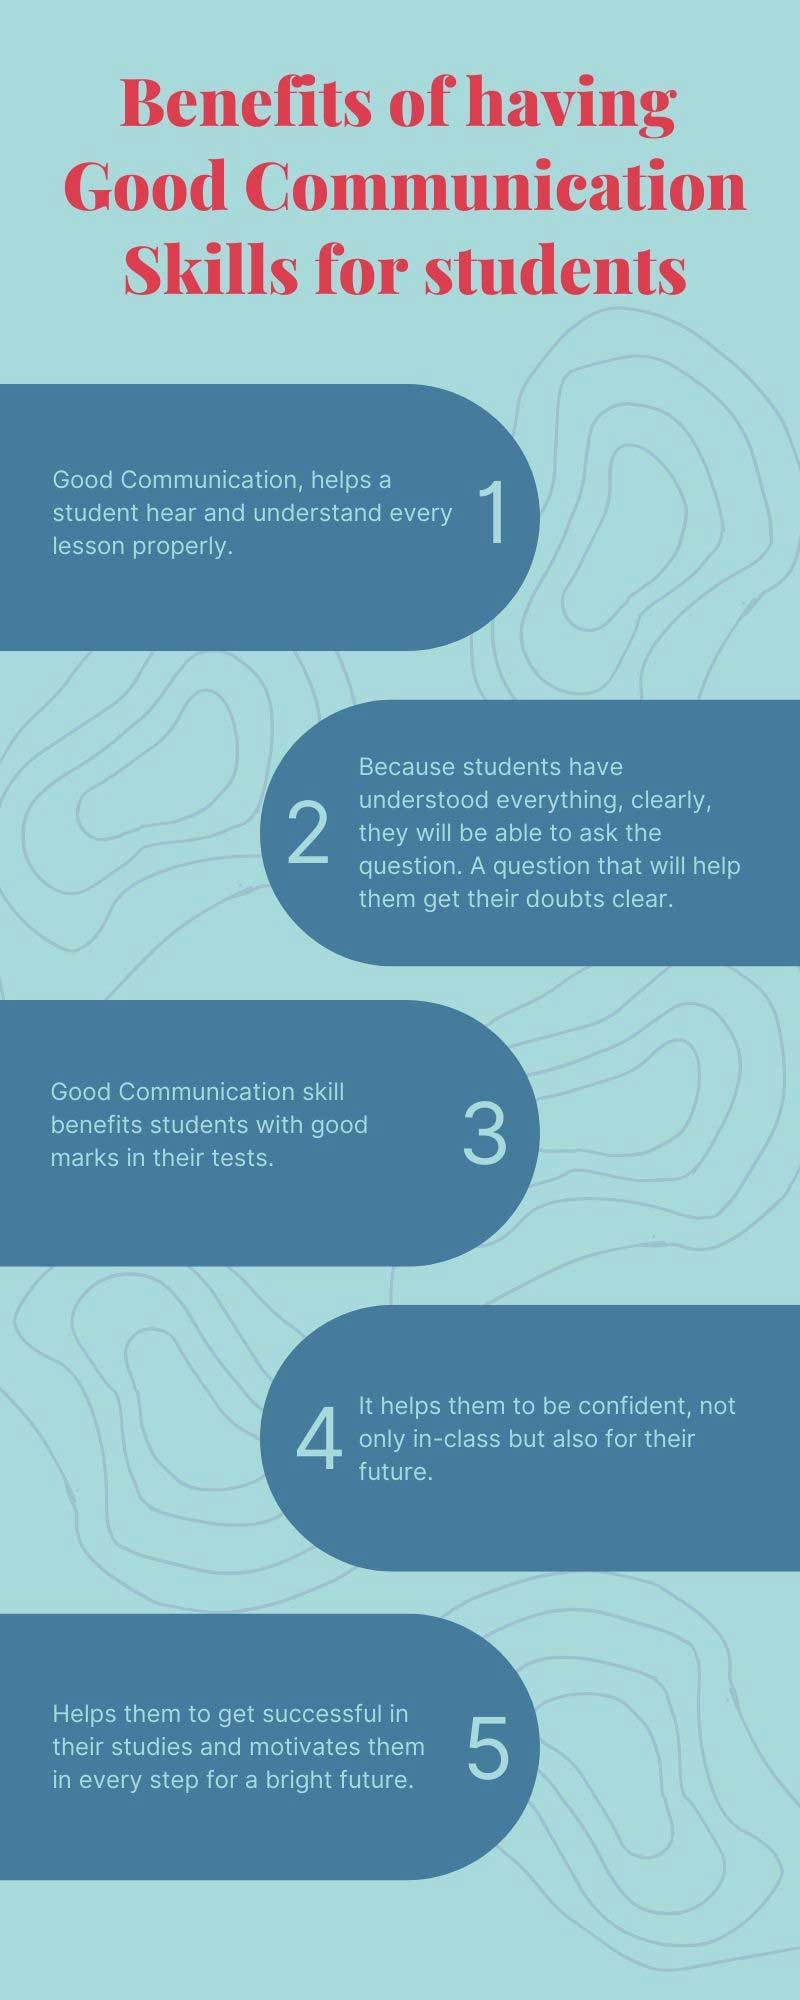 Benefits of having Good Communication Skills